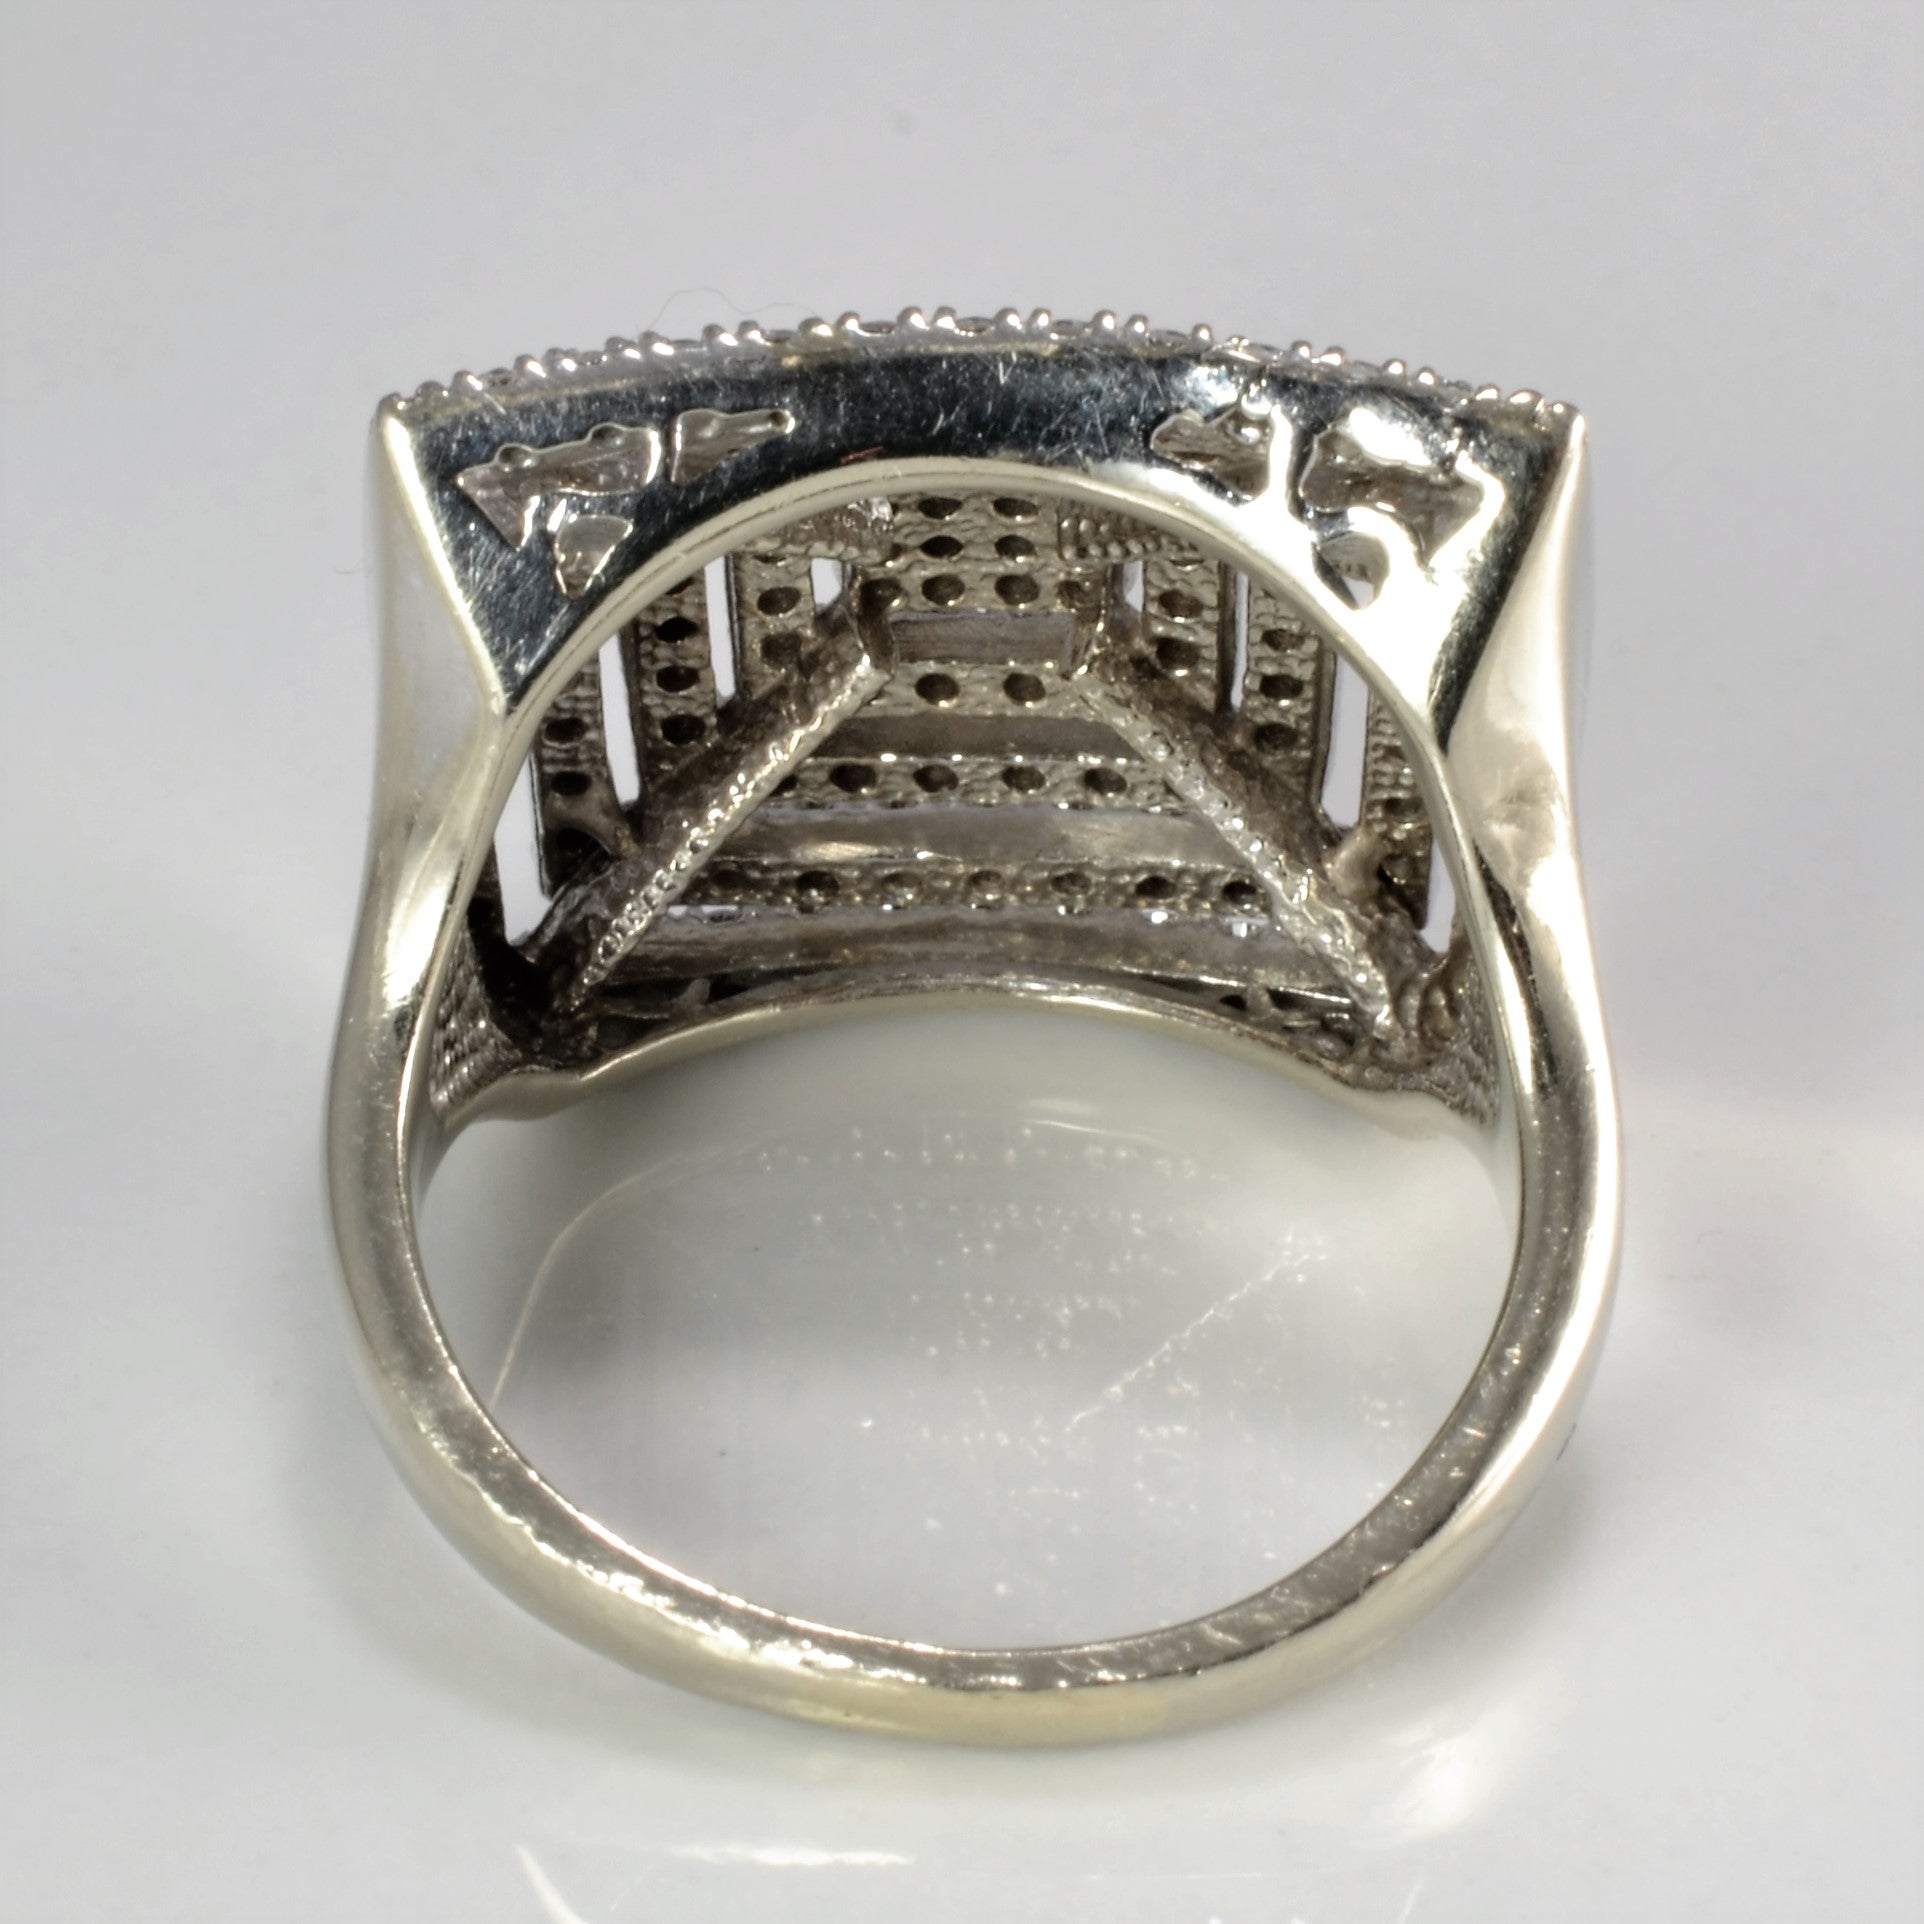 Detailed Pave Diamond Ladies Ring | 0.70 ctw, SZ 5 |